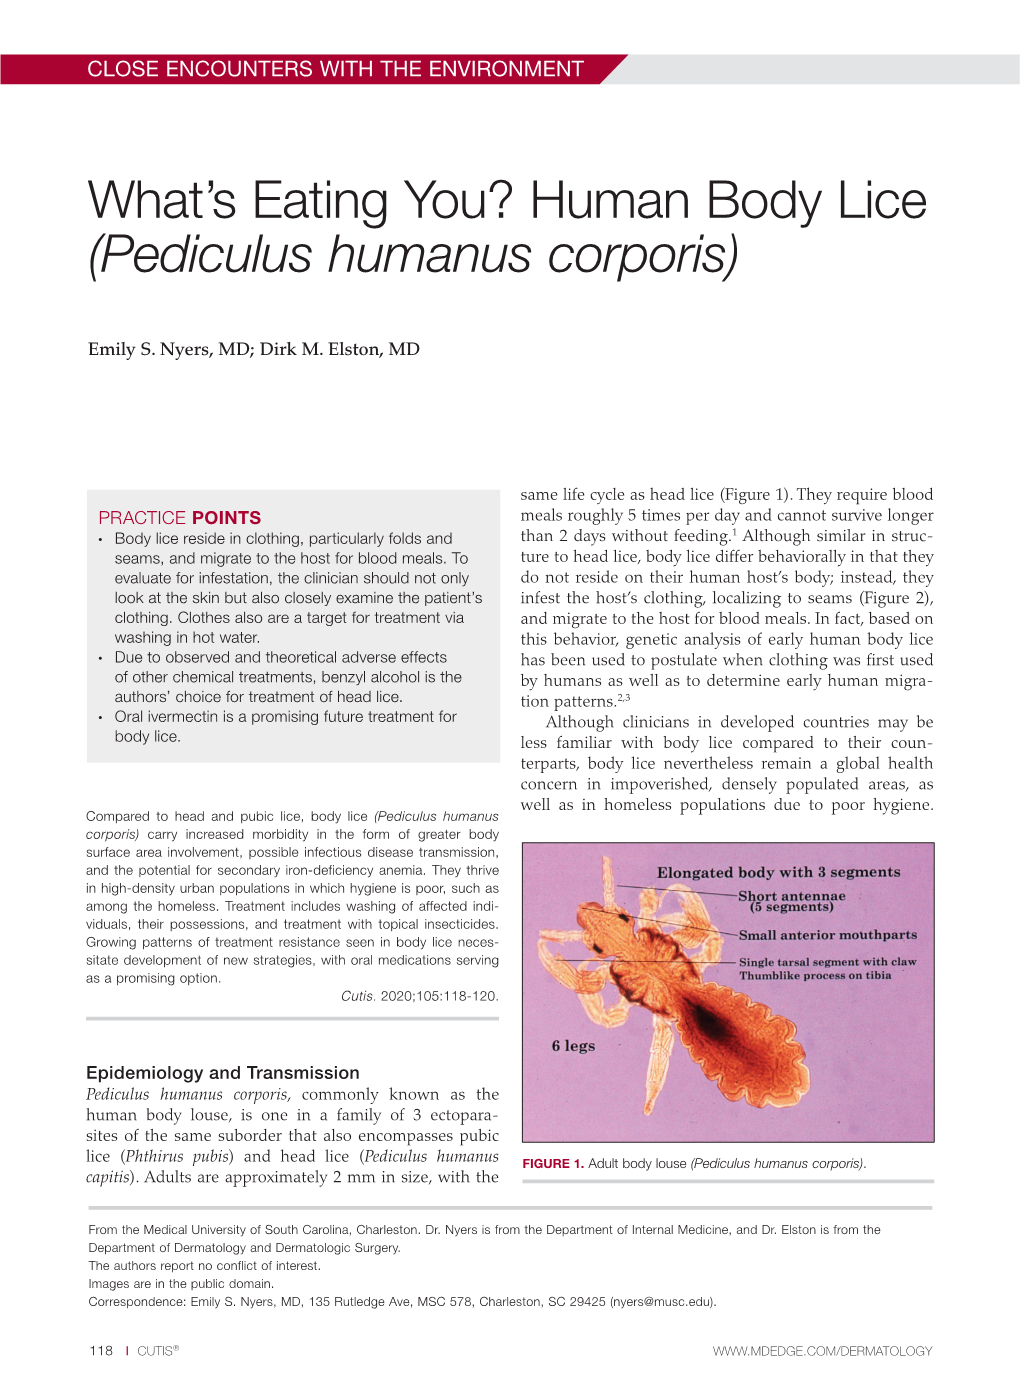 Human Body Lice (Pediculus Humanus Corporis)